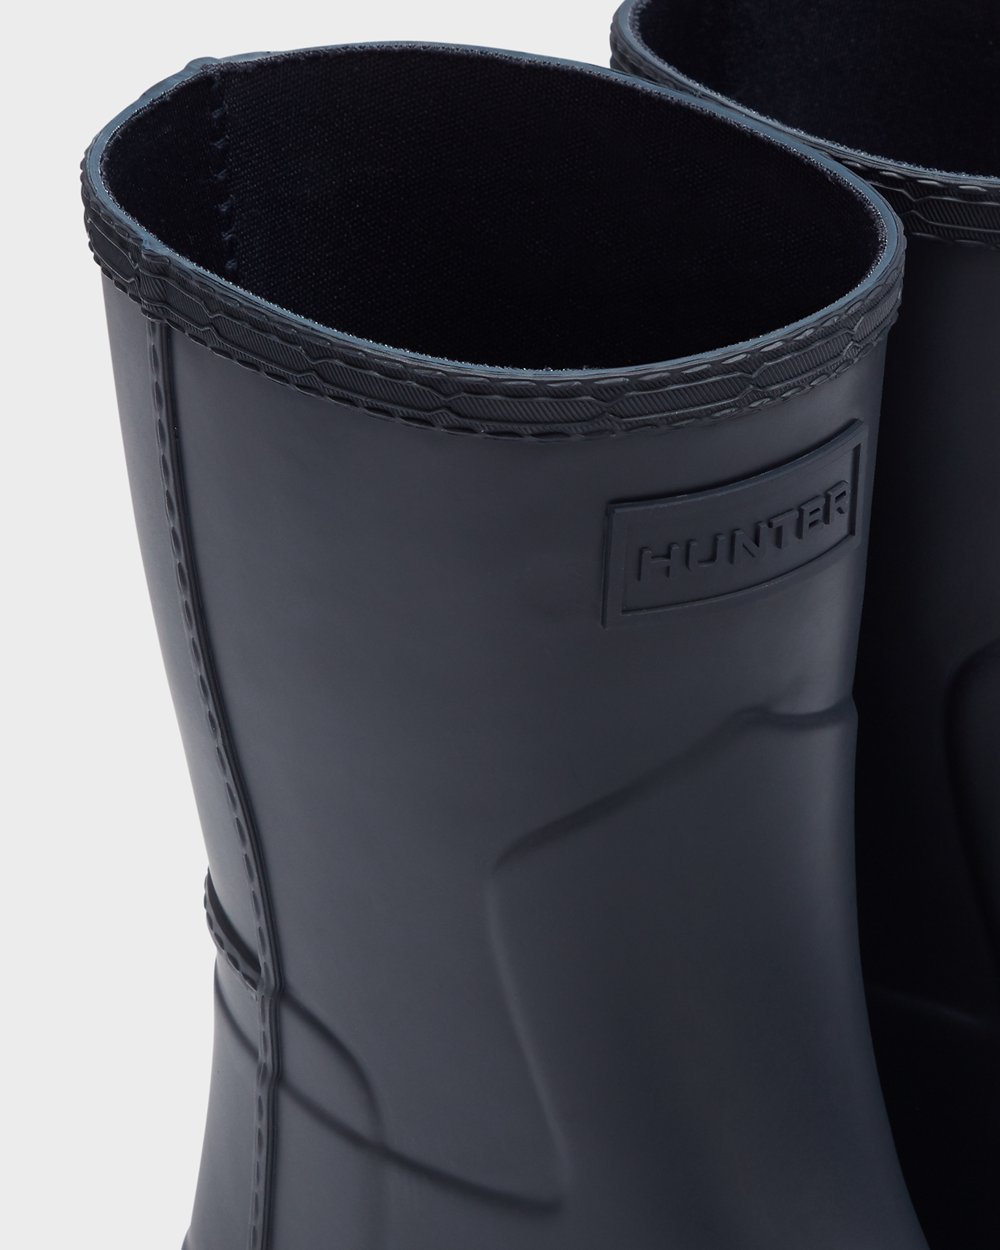 Womens Short Rain Boots - Hunter Refined Stitch Detail (27QVOSLGF) - Navy